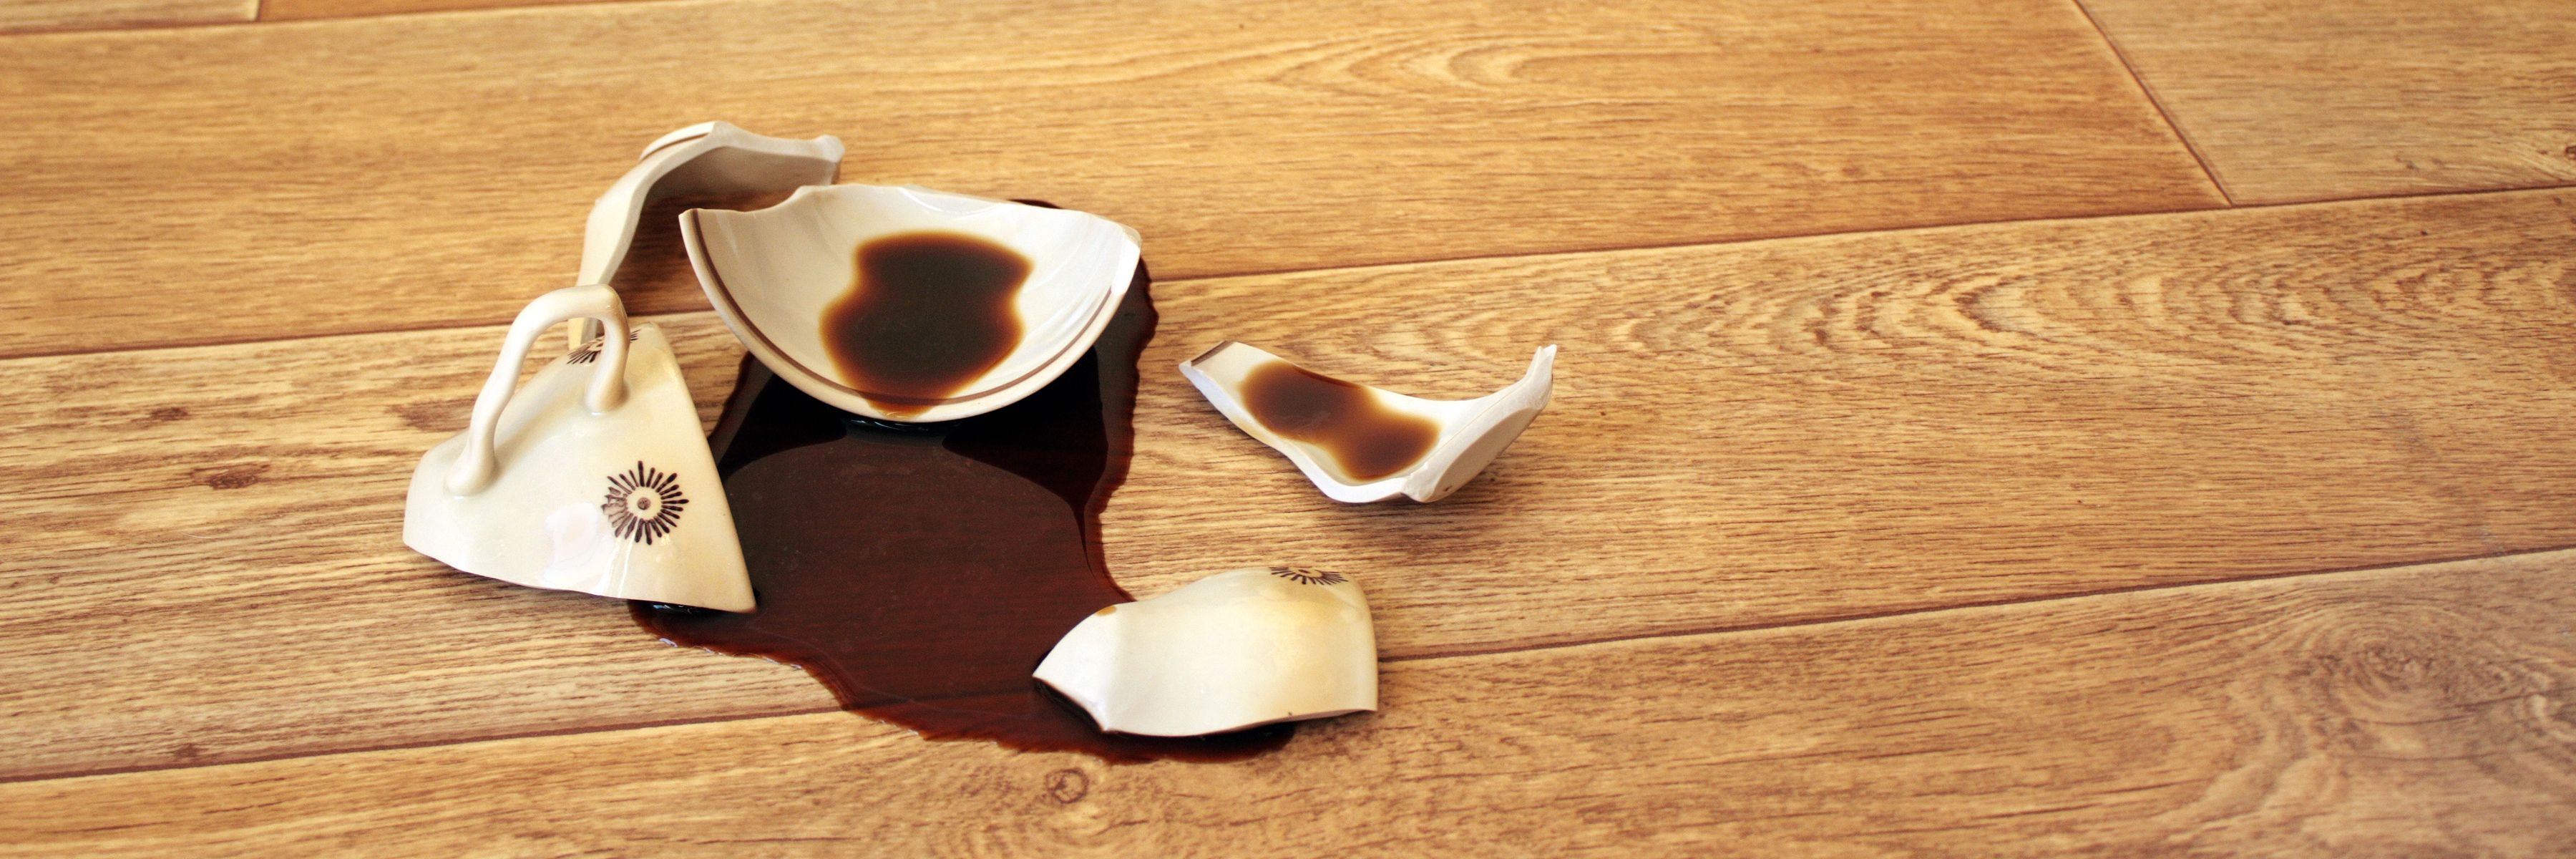 broken coffee mug on wooden floor with spilled coffee